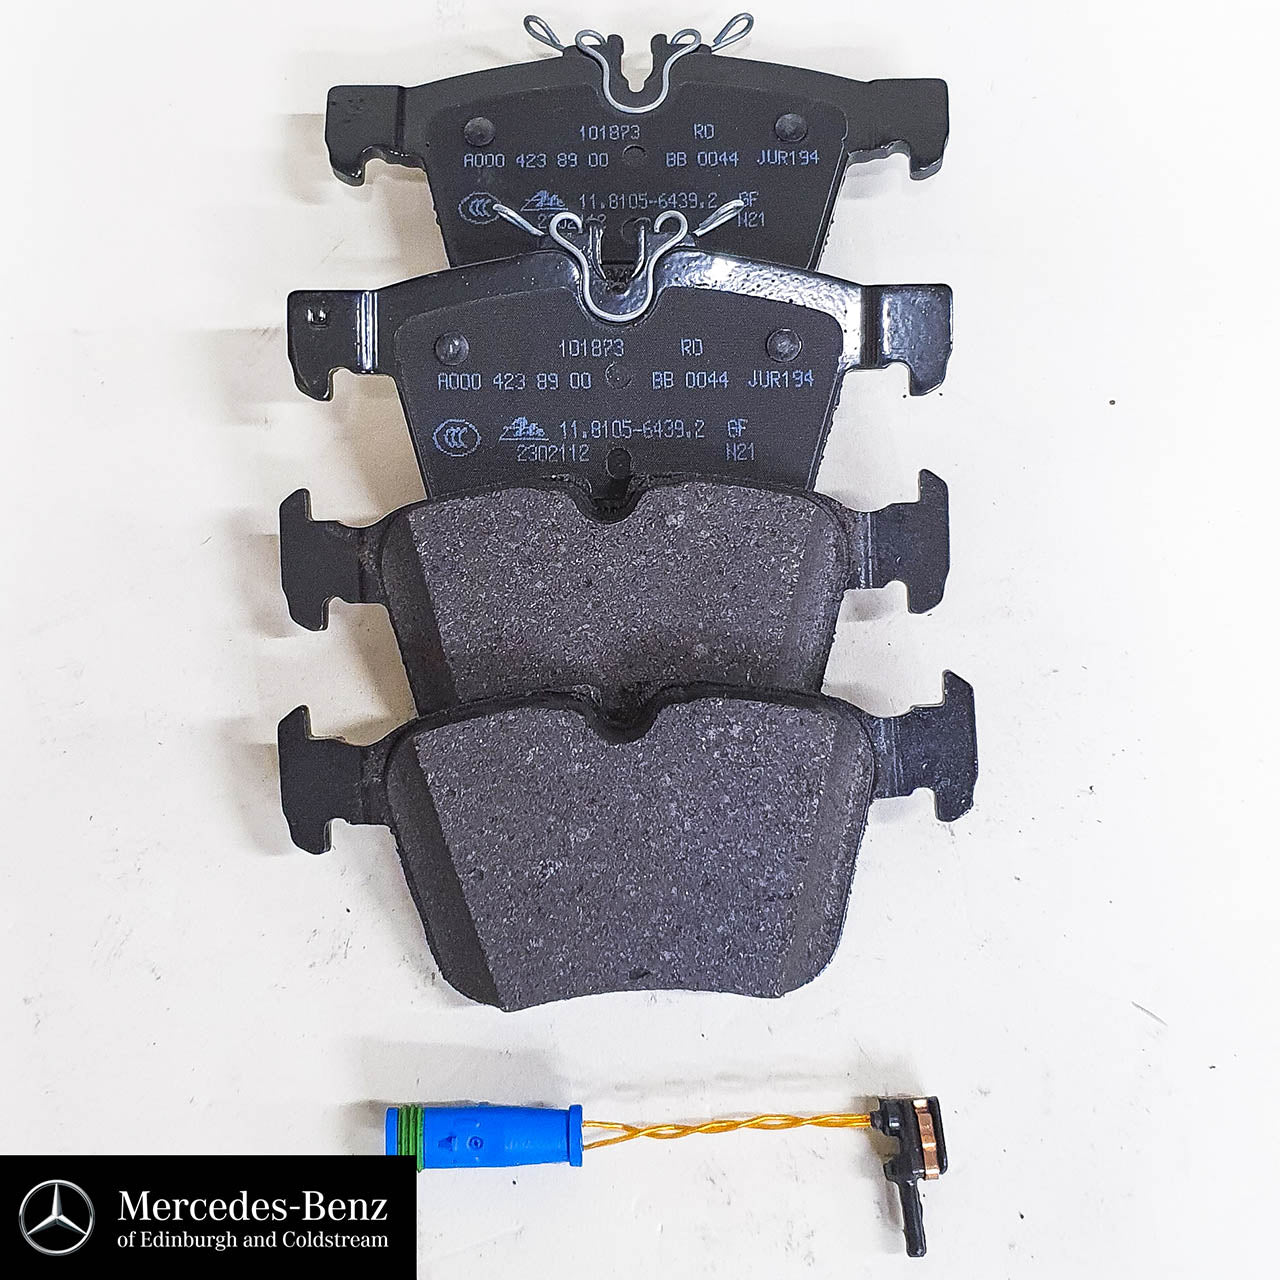 Genuine Mercedes-Benz Rear Brake Pads and sensor for GLC, C Class 205, 206